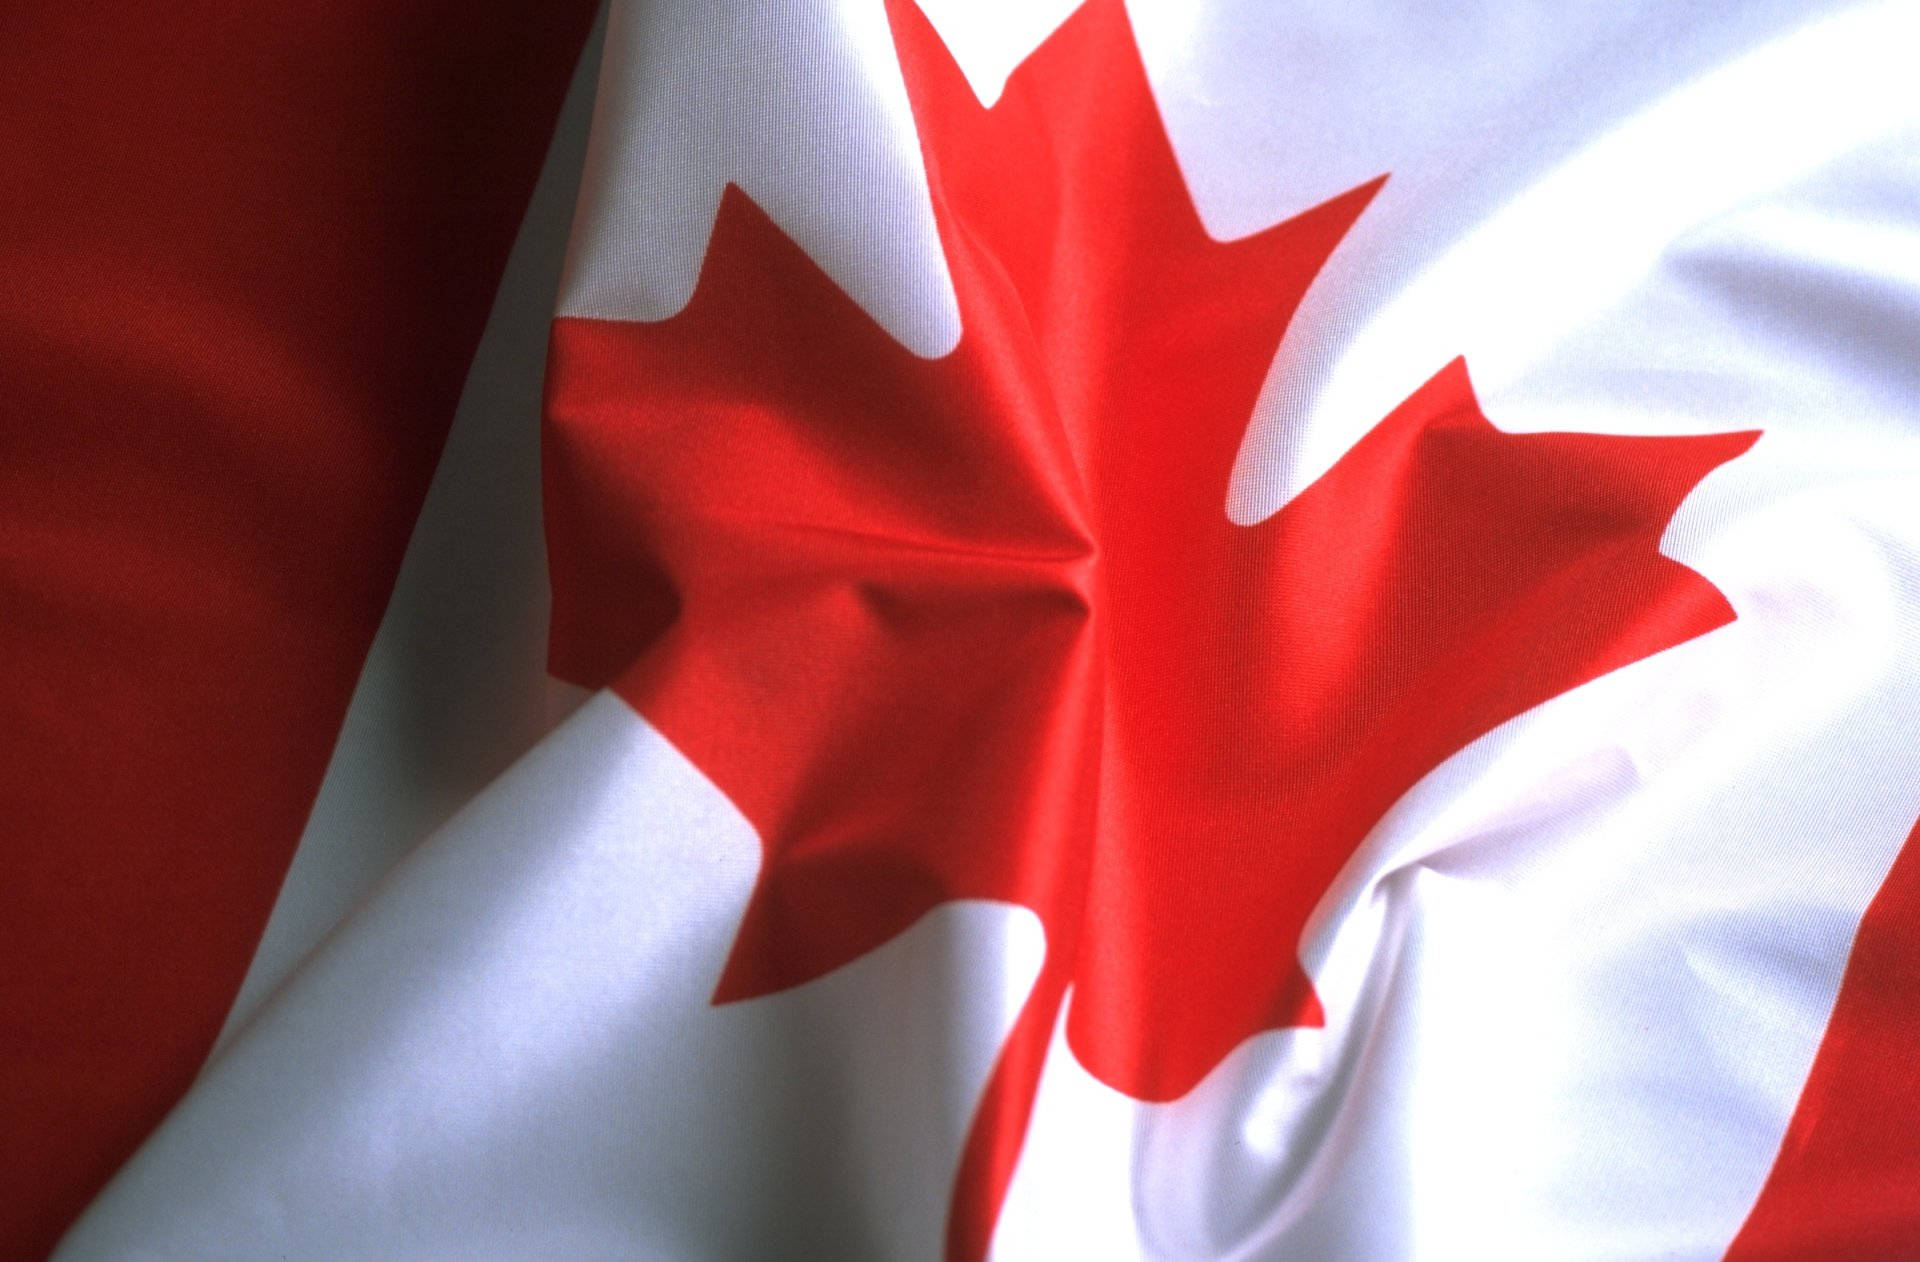 Vibrant Maple Leaf - Emblem Of Canada Background